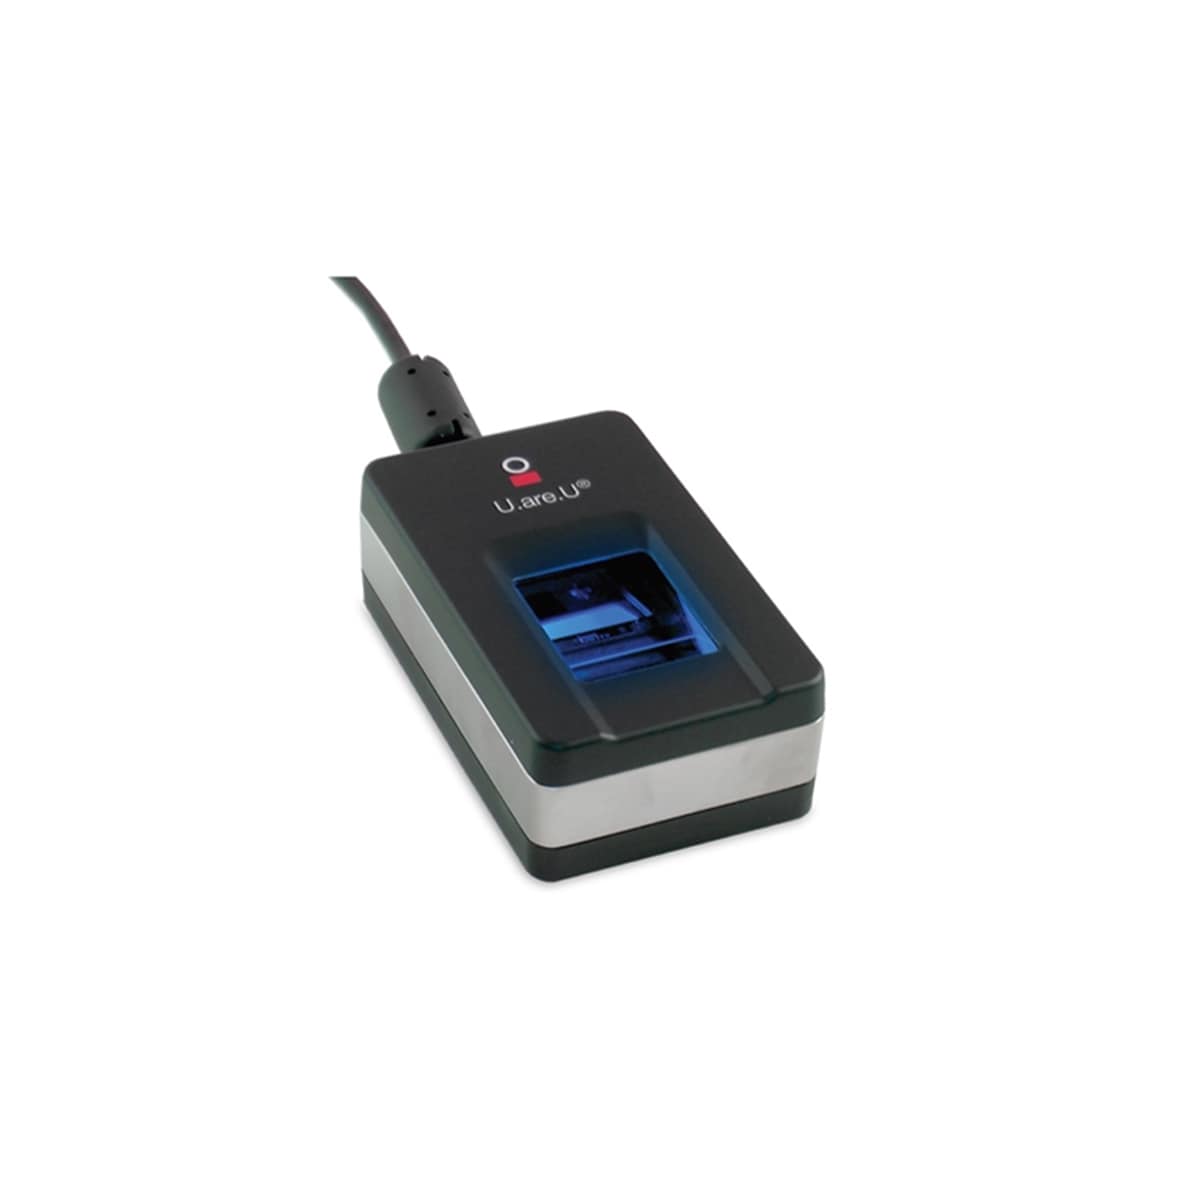 Crossmatch U.are.U 5300 FIPS USB 30 201/PIV, Biometrics, Certified Fingerprint Inc Fulcrum – FAP